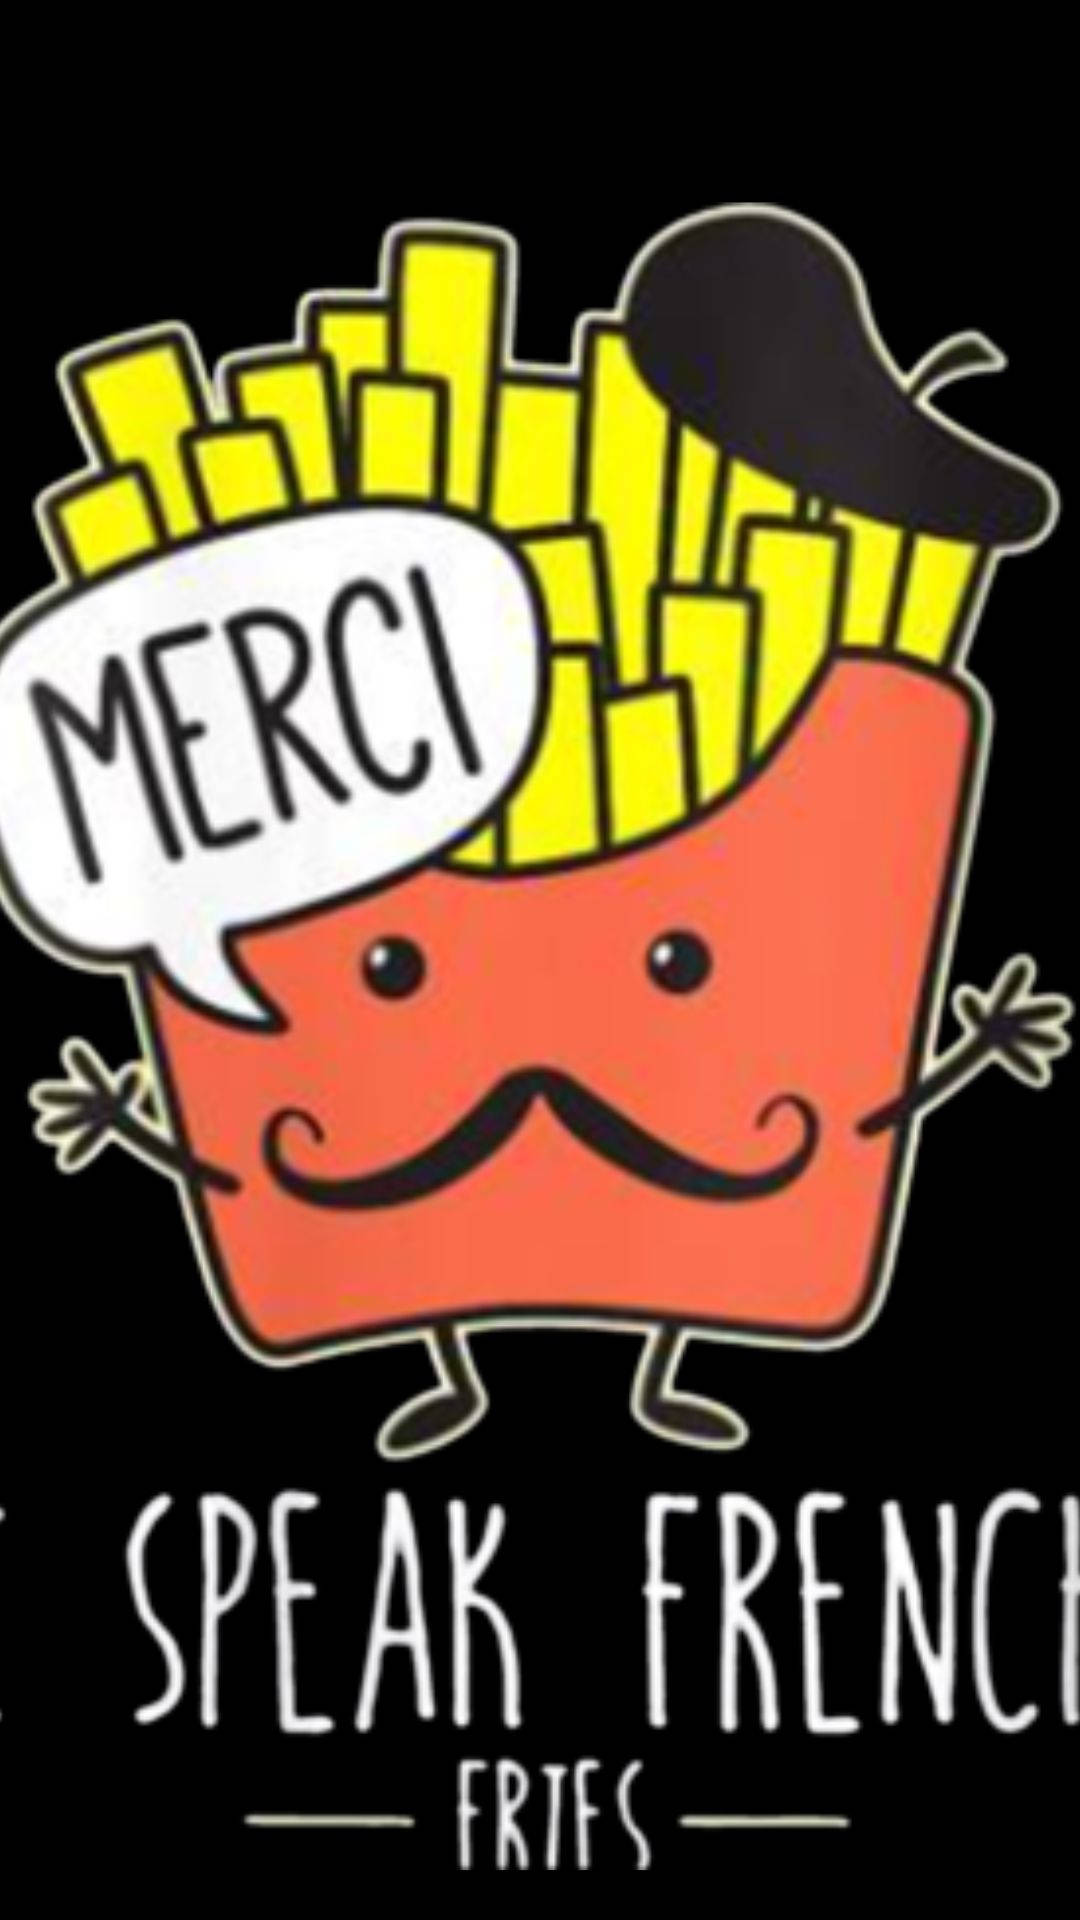 Speak French Fries Background